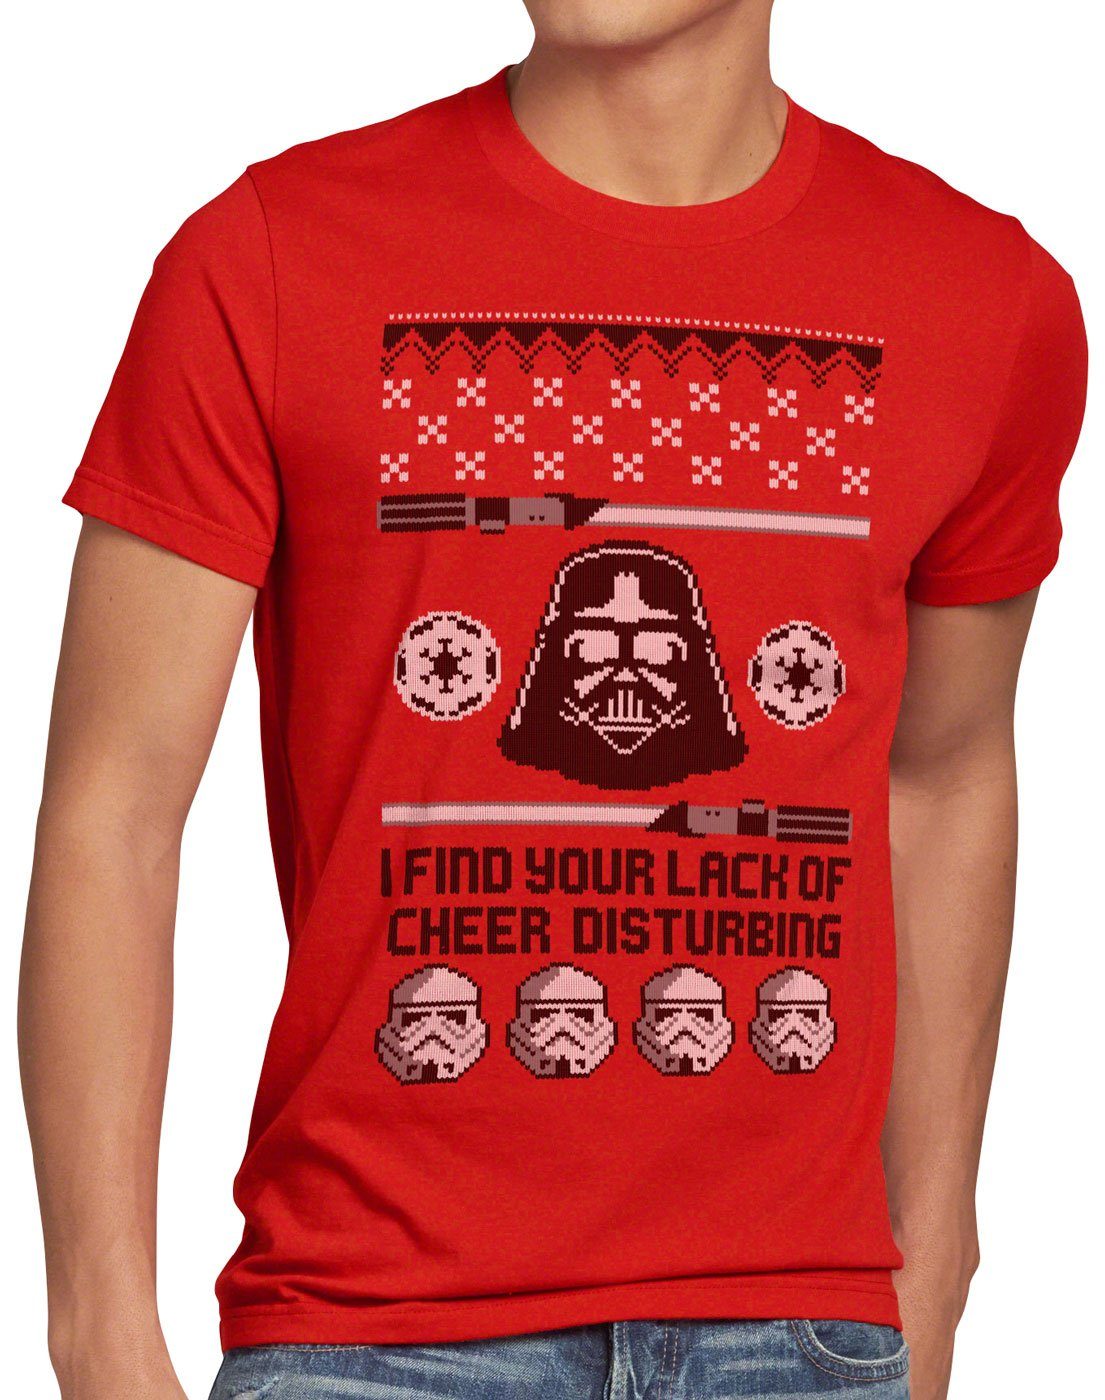 style3 Print-Shirt Herren T-Shirt Lack of x-mas Ugly vader sith rot pulli Sweater Cheer lichtschwert weihnachtsbaum